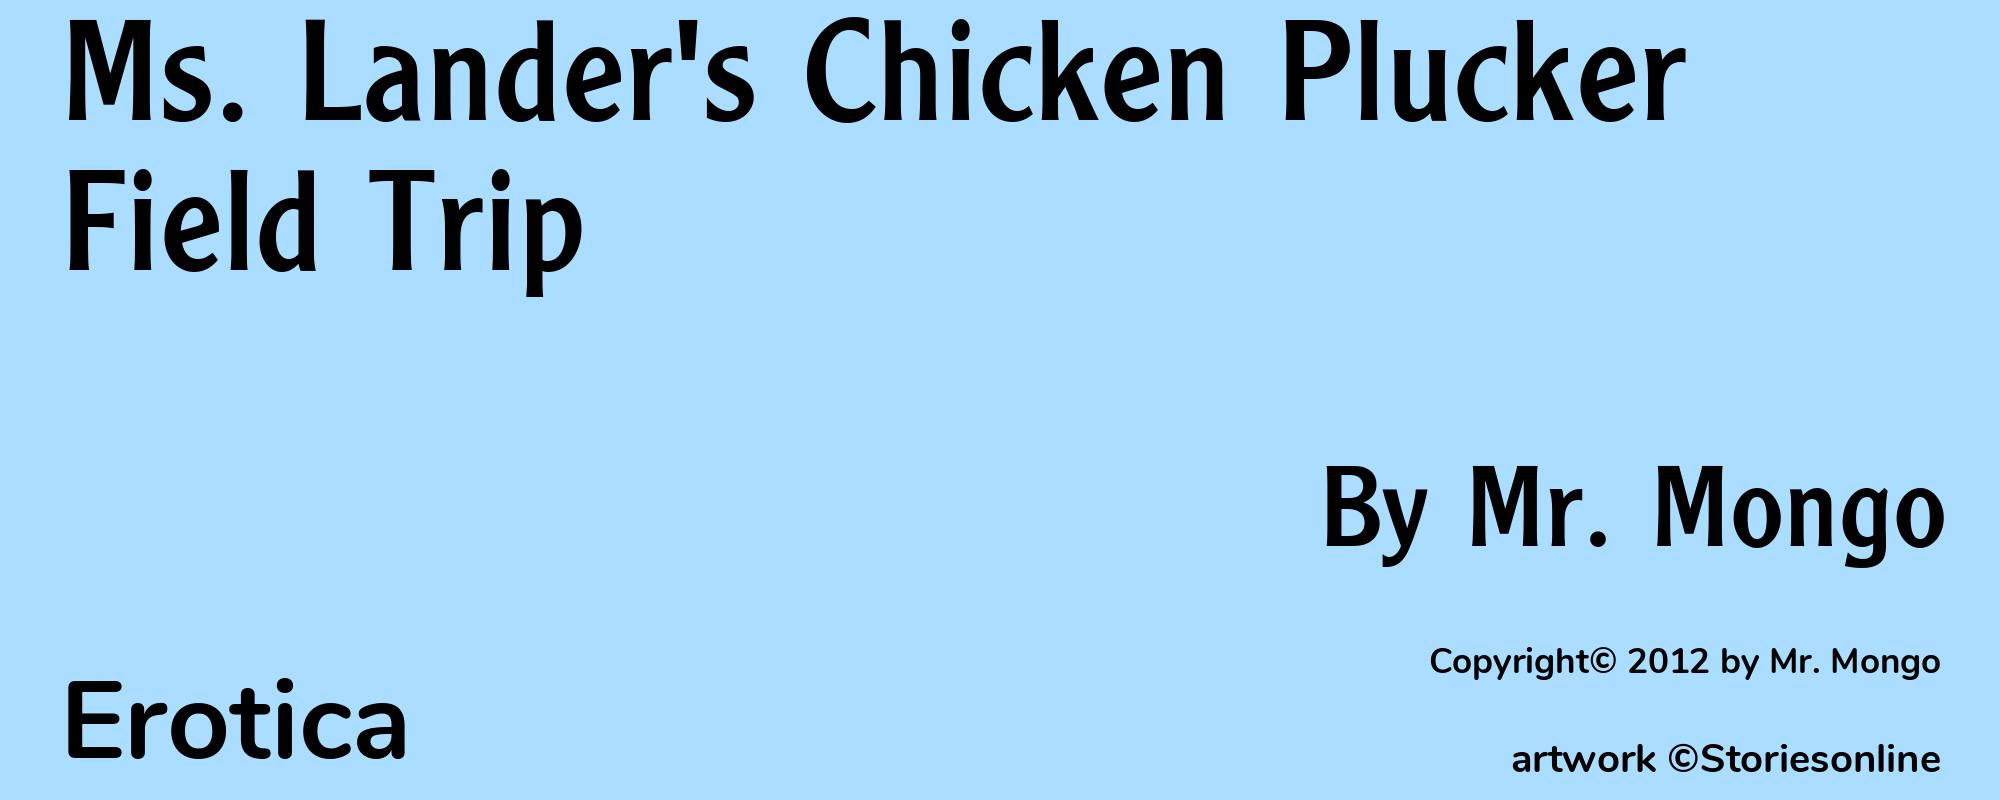 Ms. Lander's Chicken Plucker Field Trip - Cover